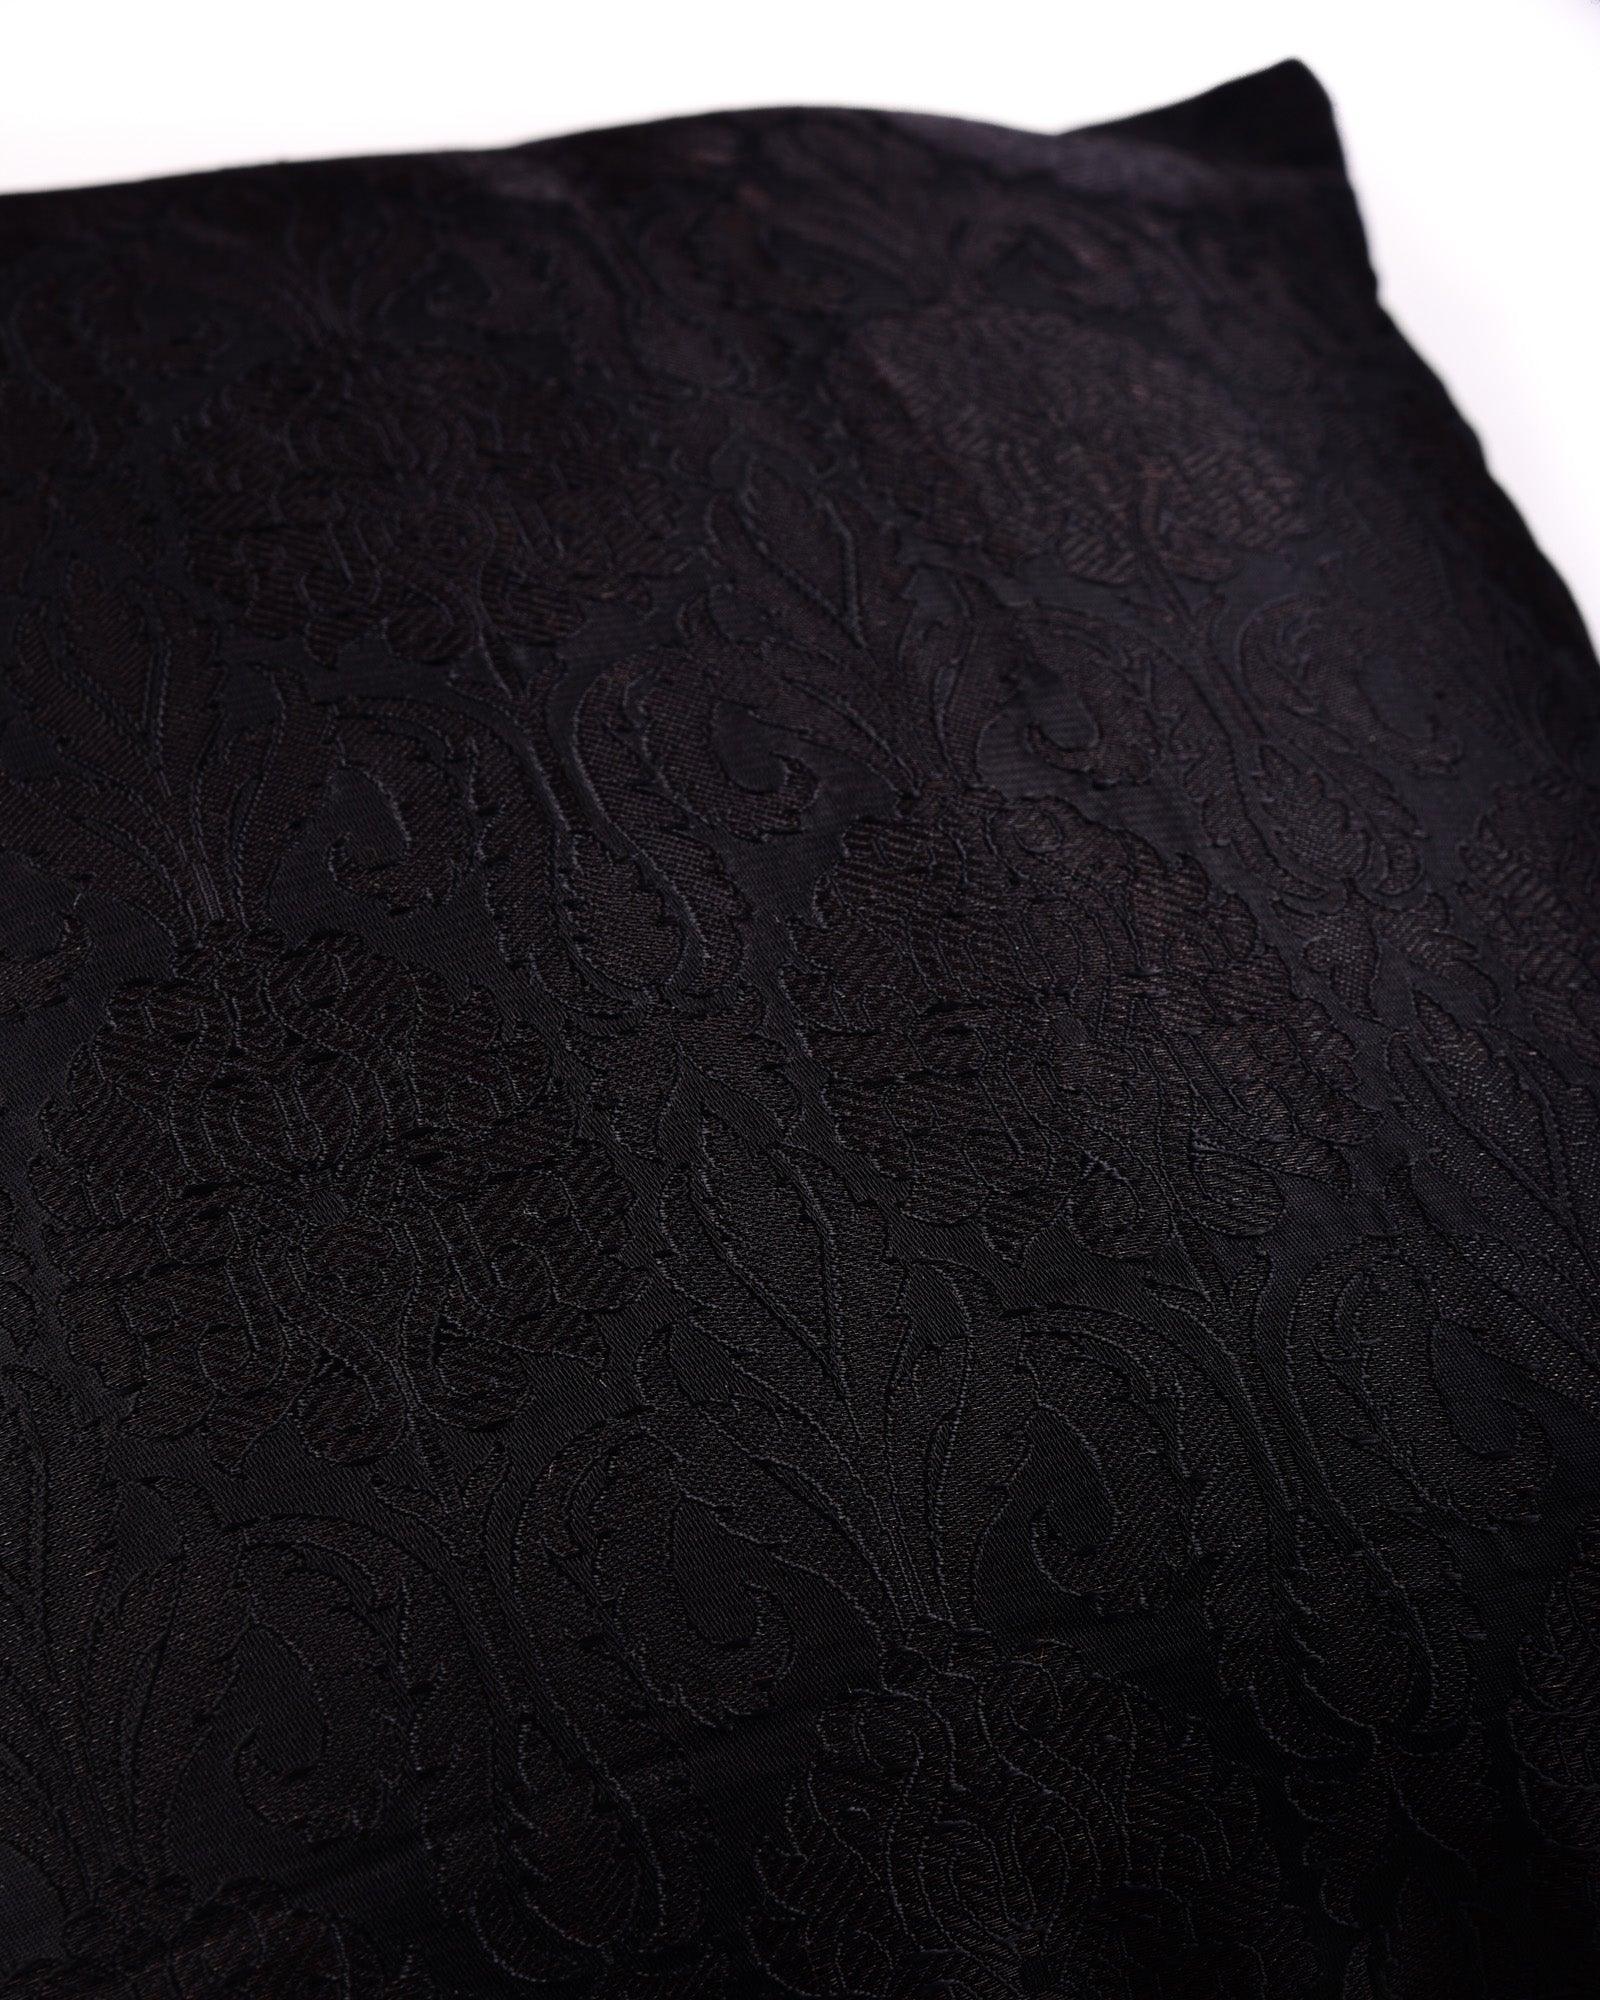 Black Banarasi Damask Viscose Silk Cushion Cover 16" - By HolyWeaves, Benares